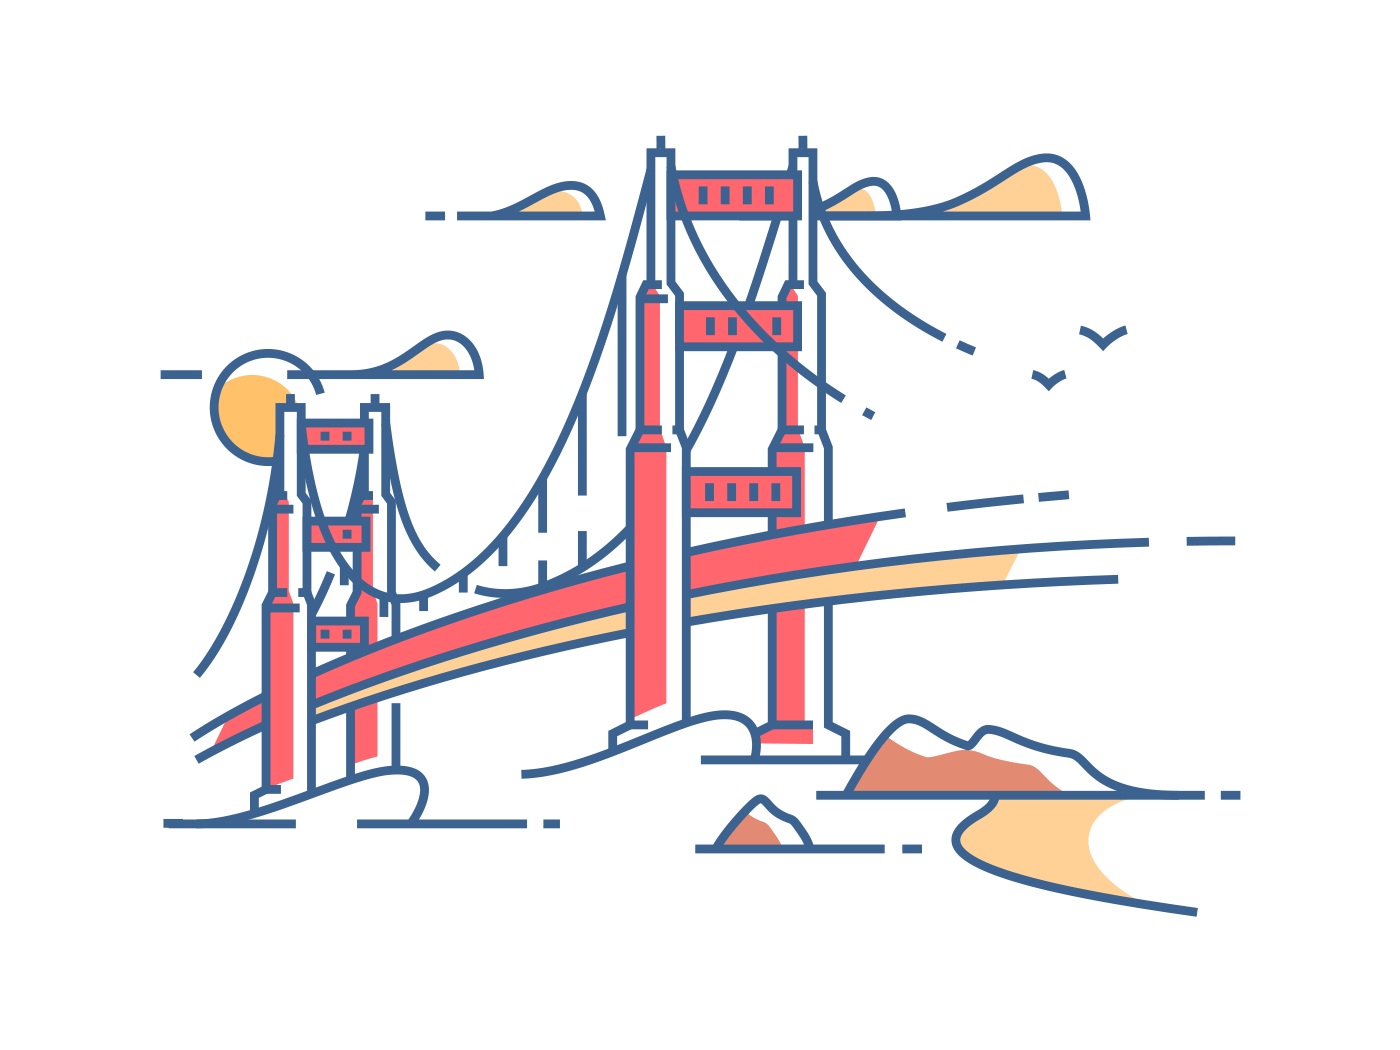 Golden Gate Bridge to San Francisco for crossing bay. Vector illustration